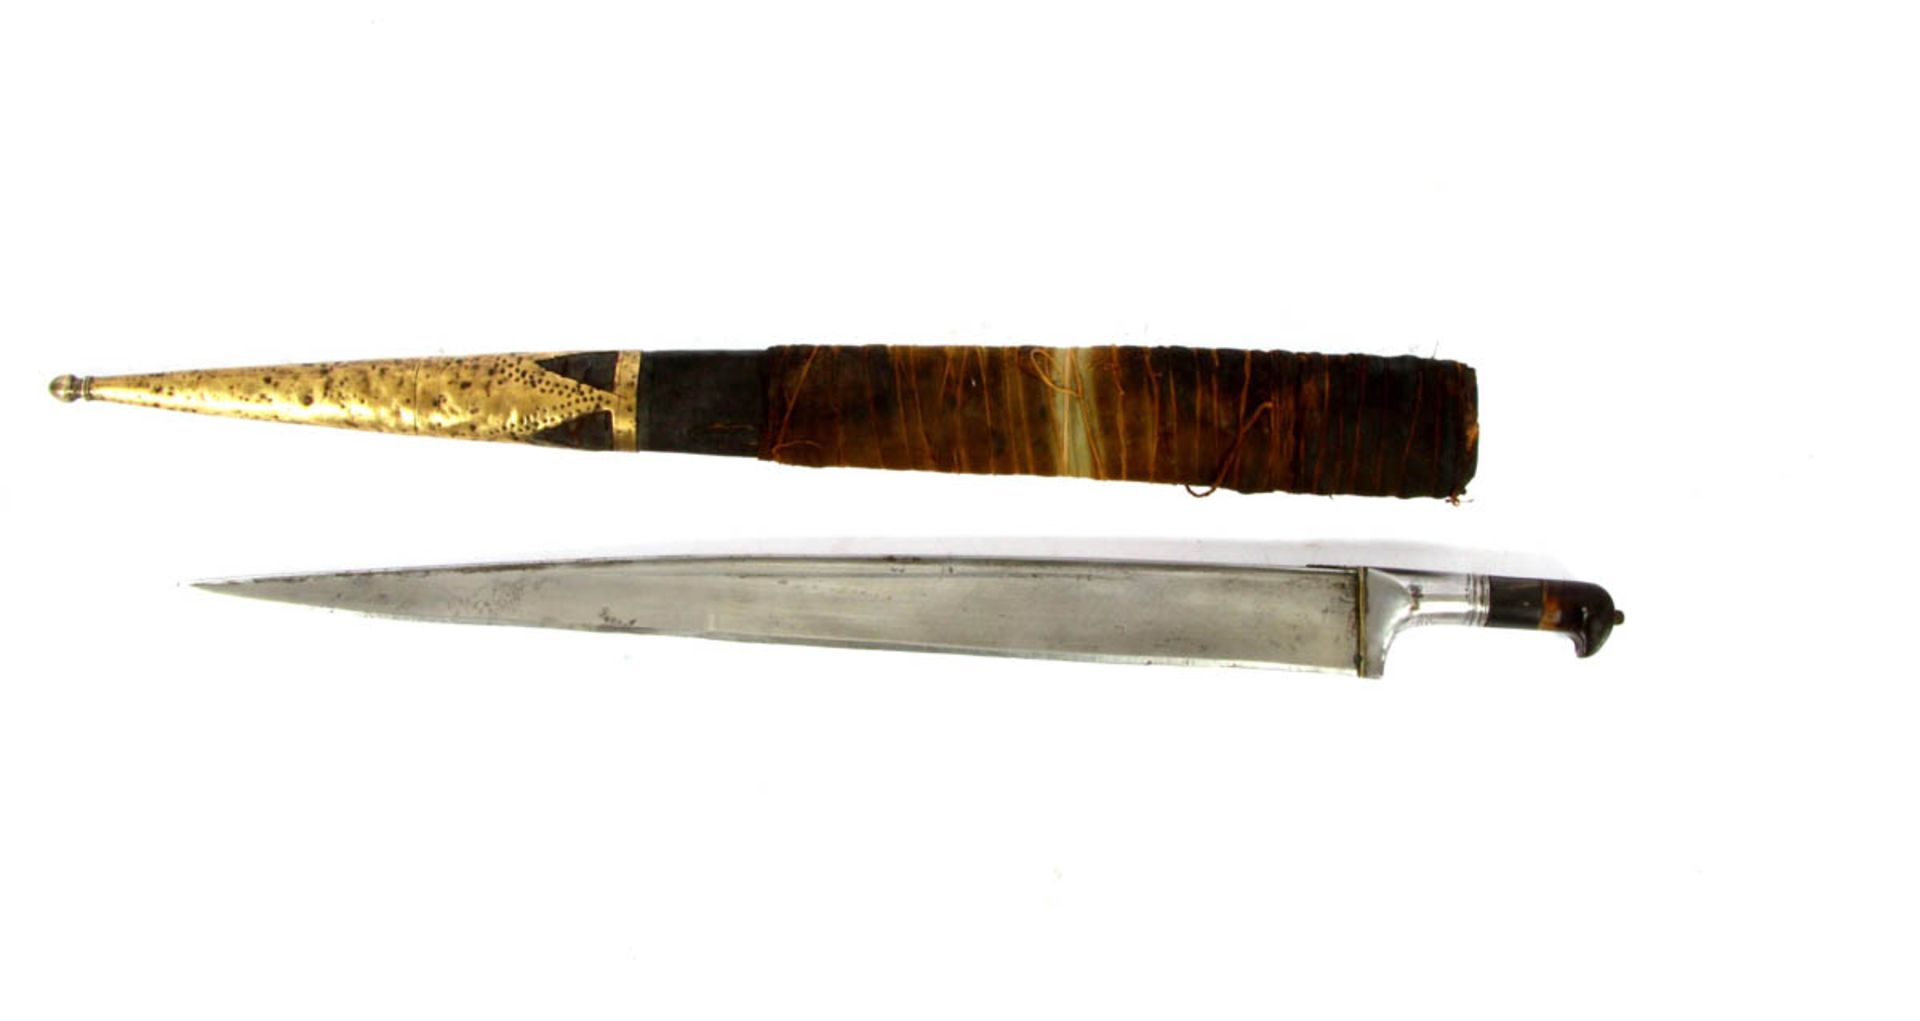 Khybermesser, Afghanistan Rückenklinge, Pistolengriff aus Holz, Scheide aus Leder umwickelt,